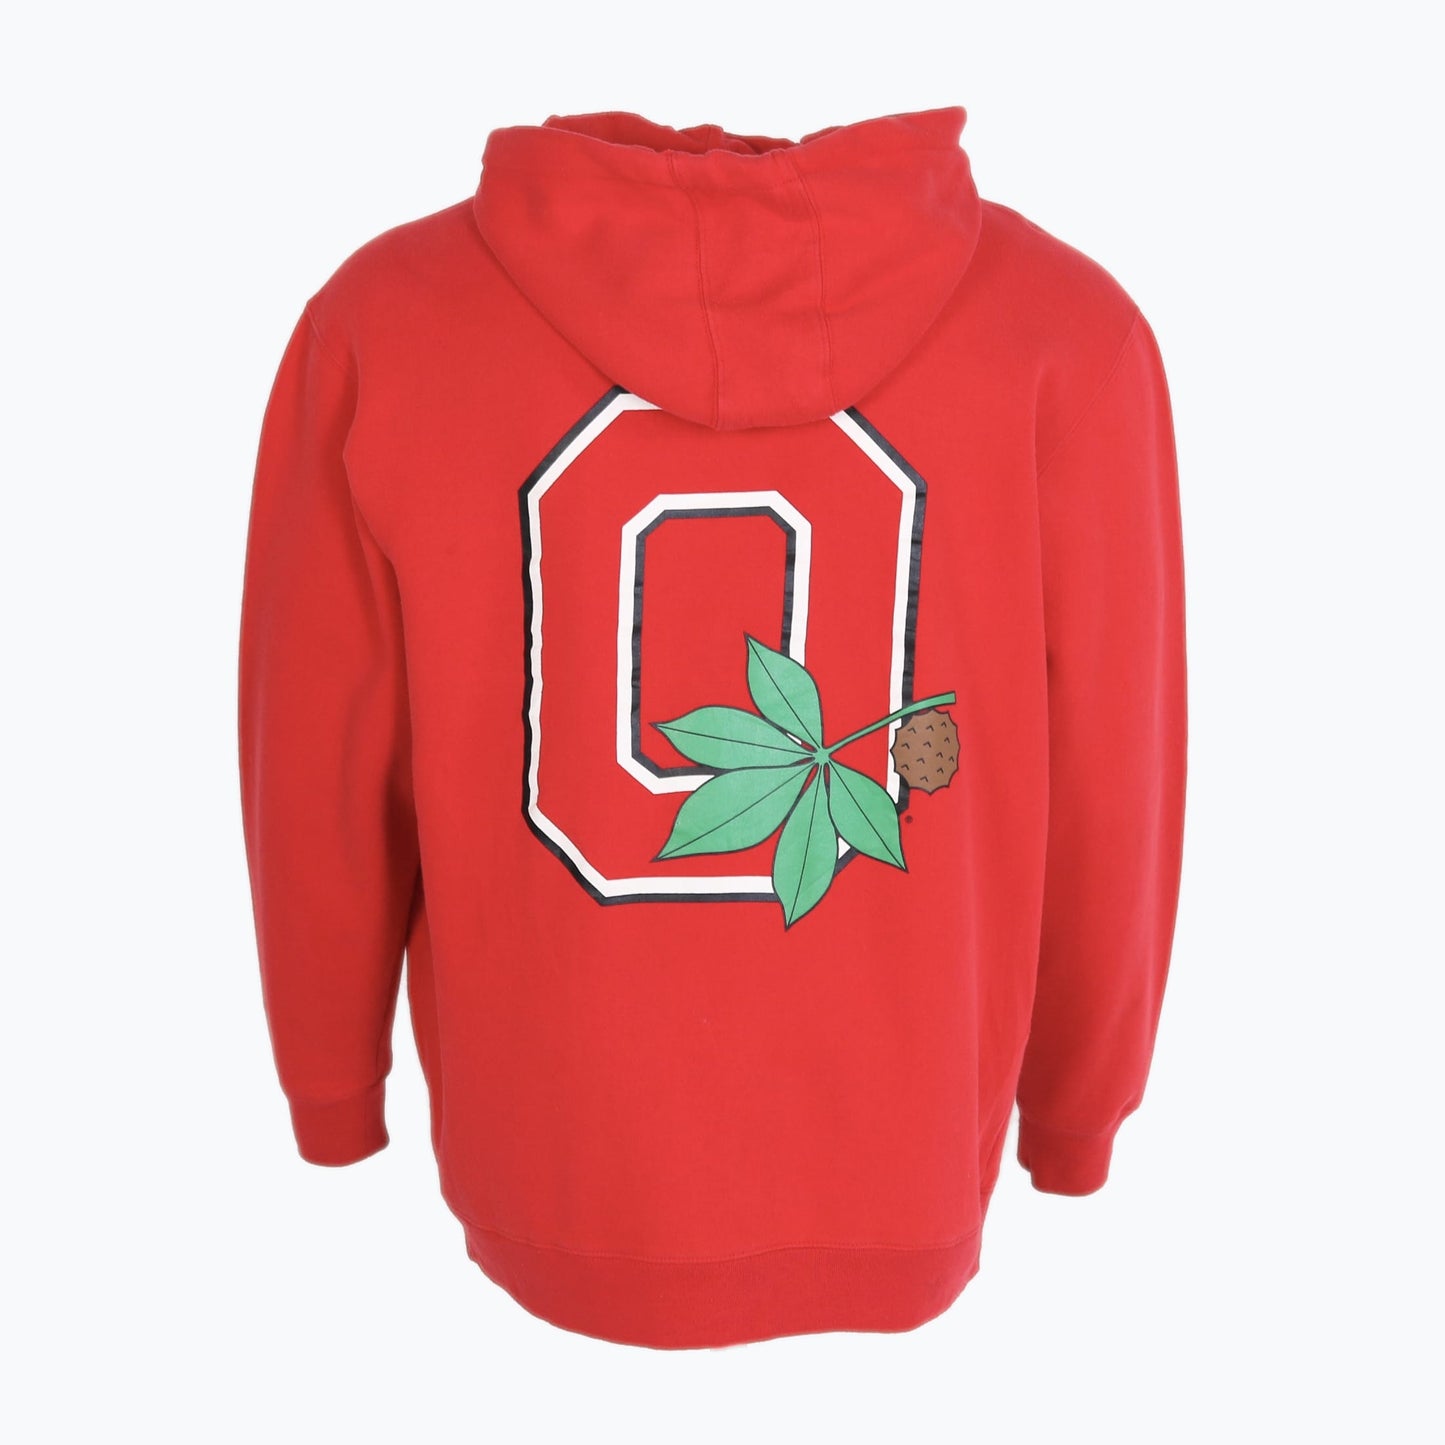 'OSU' Hooded Sweatshirt - American Madness